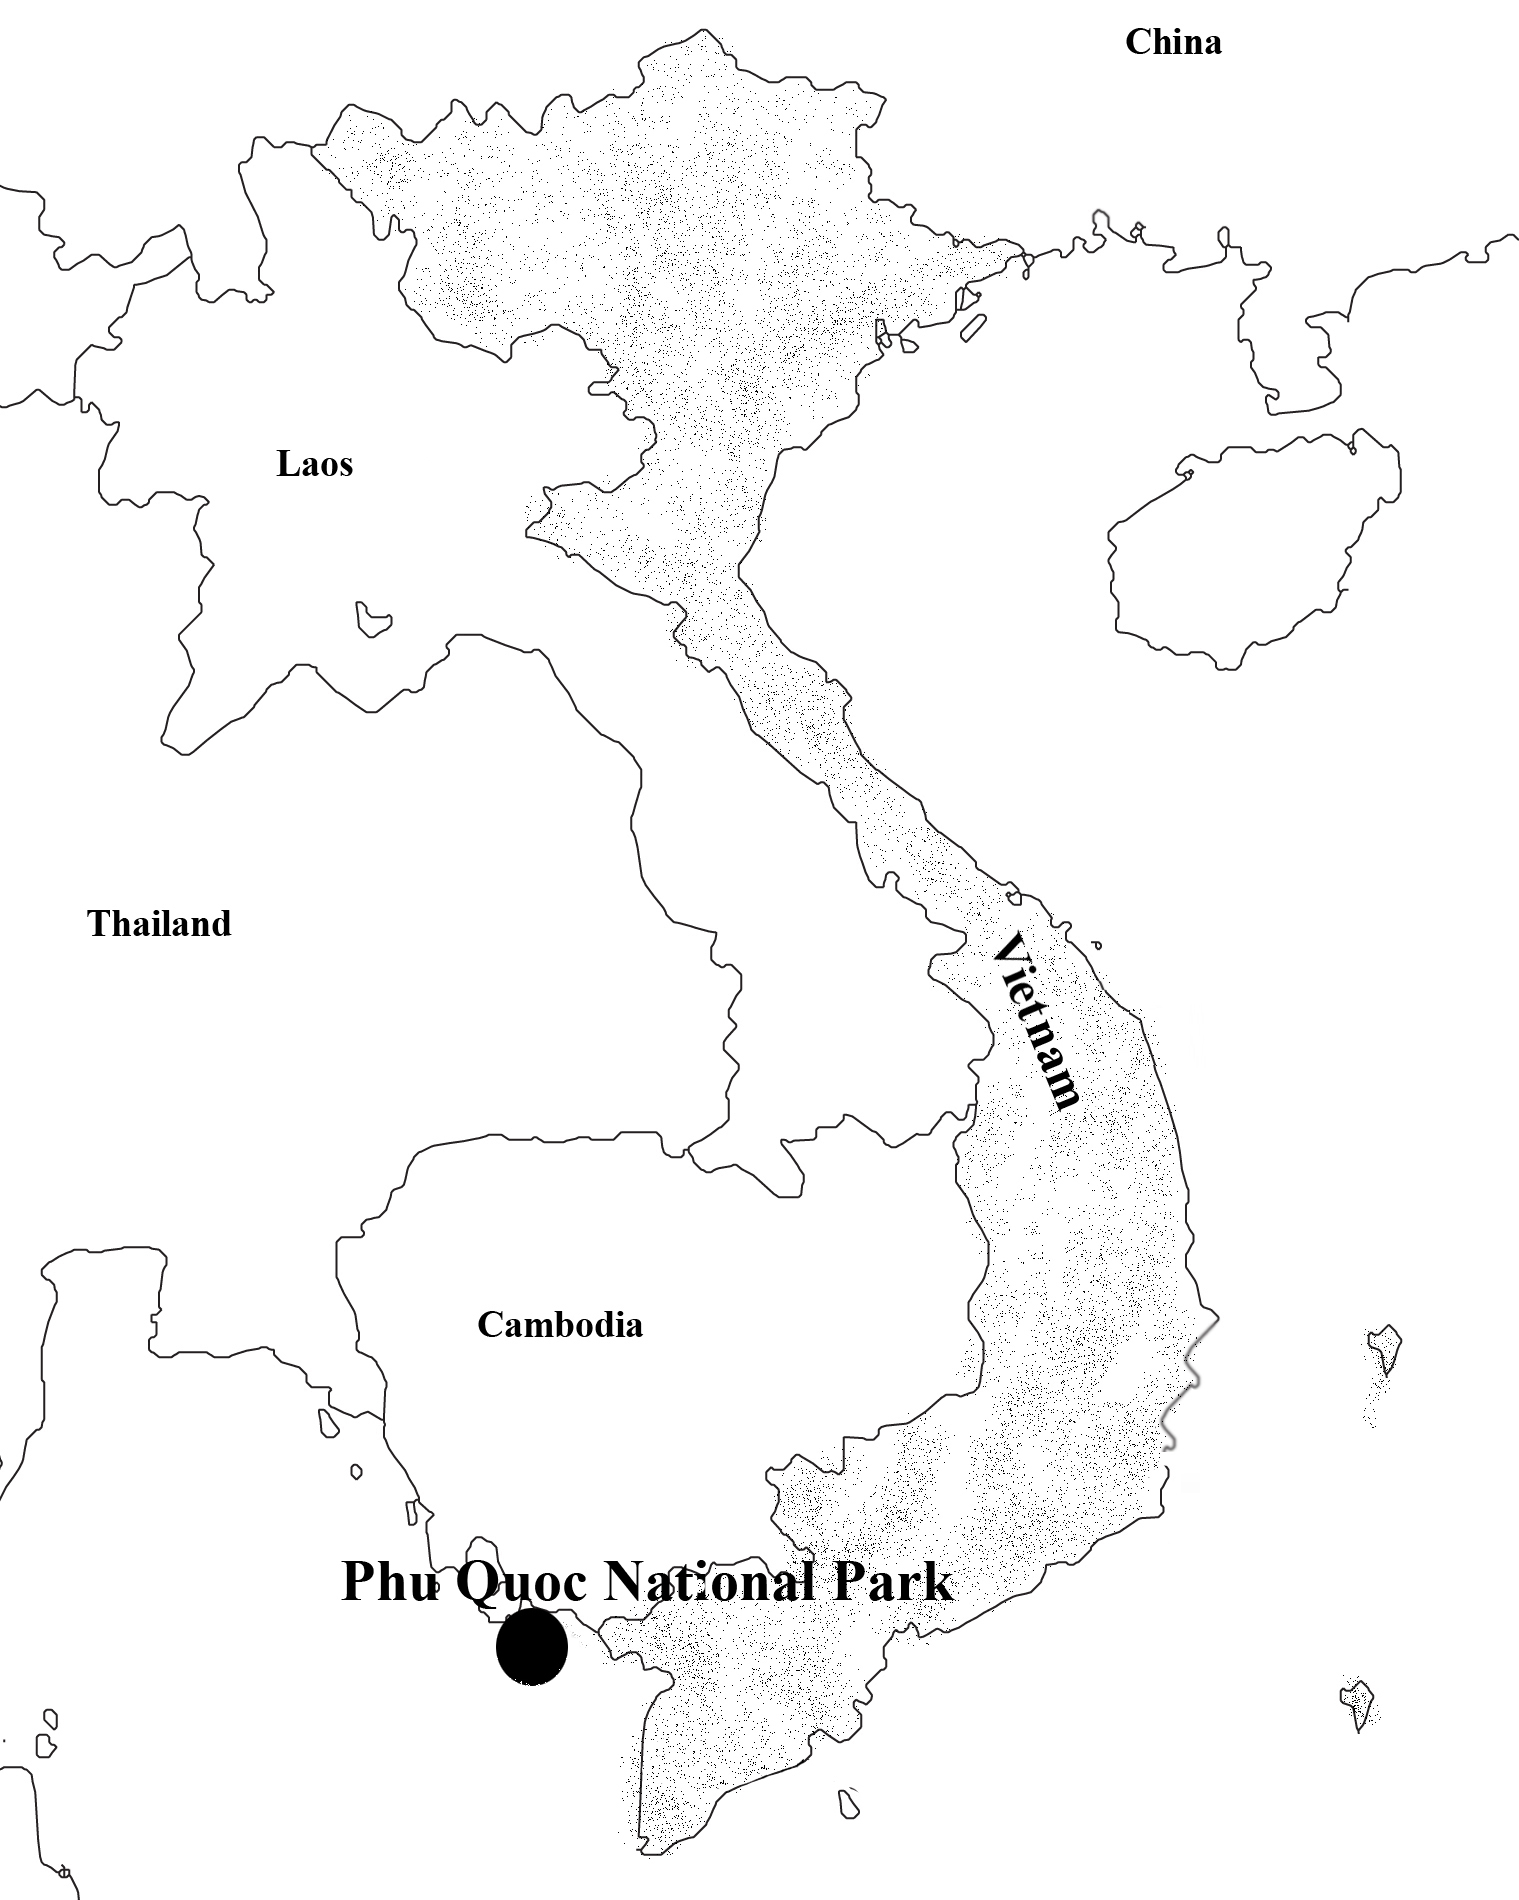 Fig.1. Locality of Phu Quoc National Park, Vietnam.